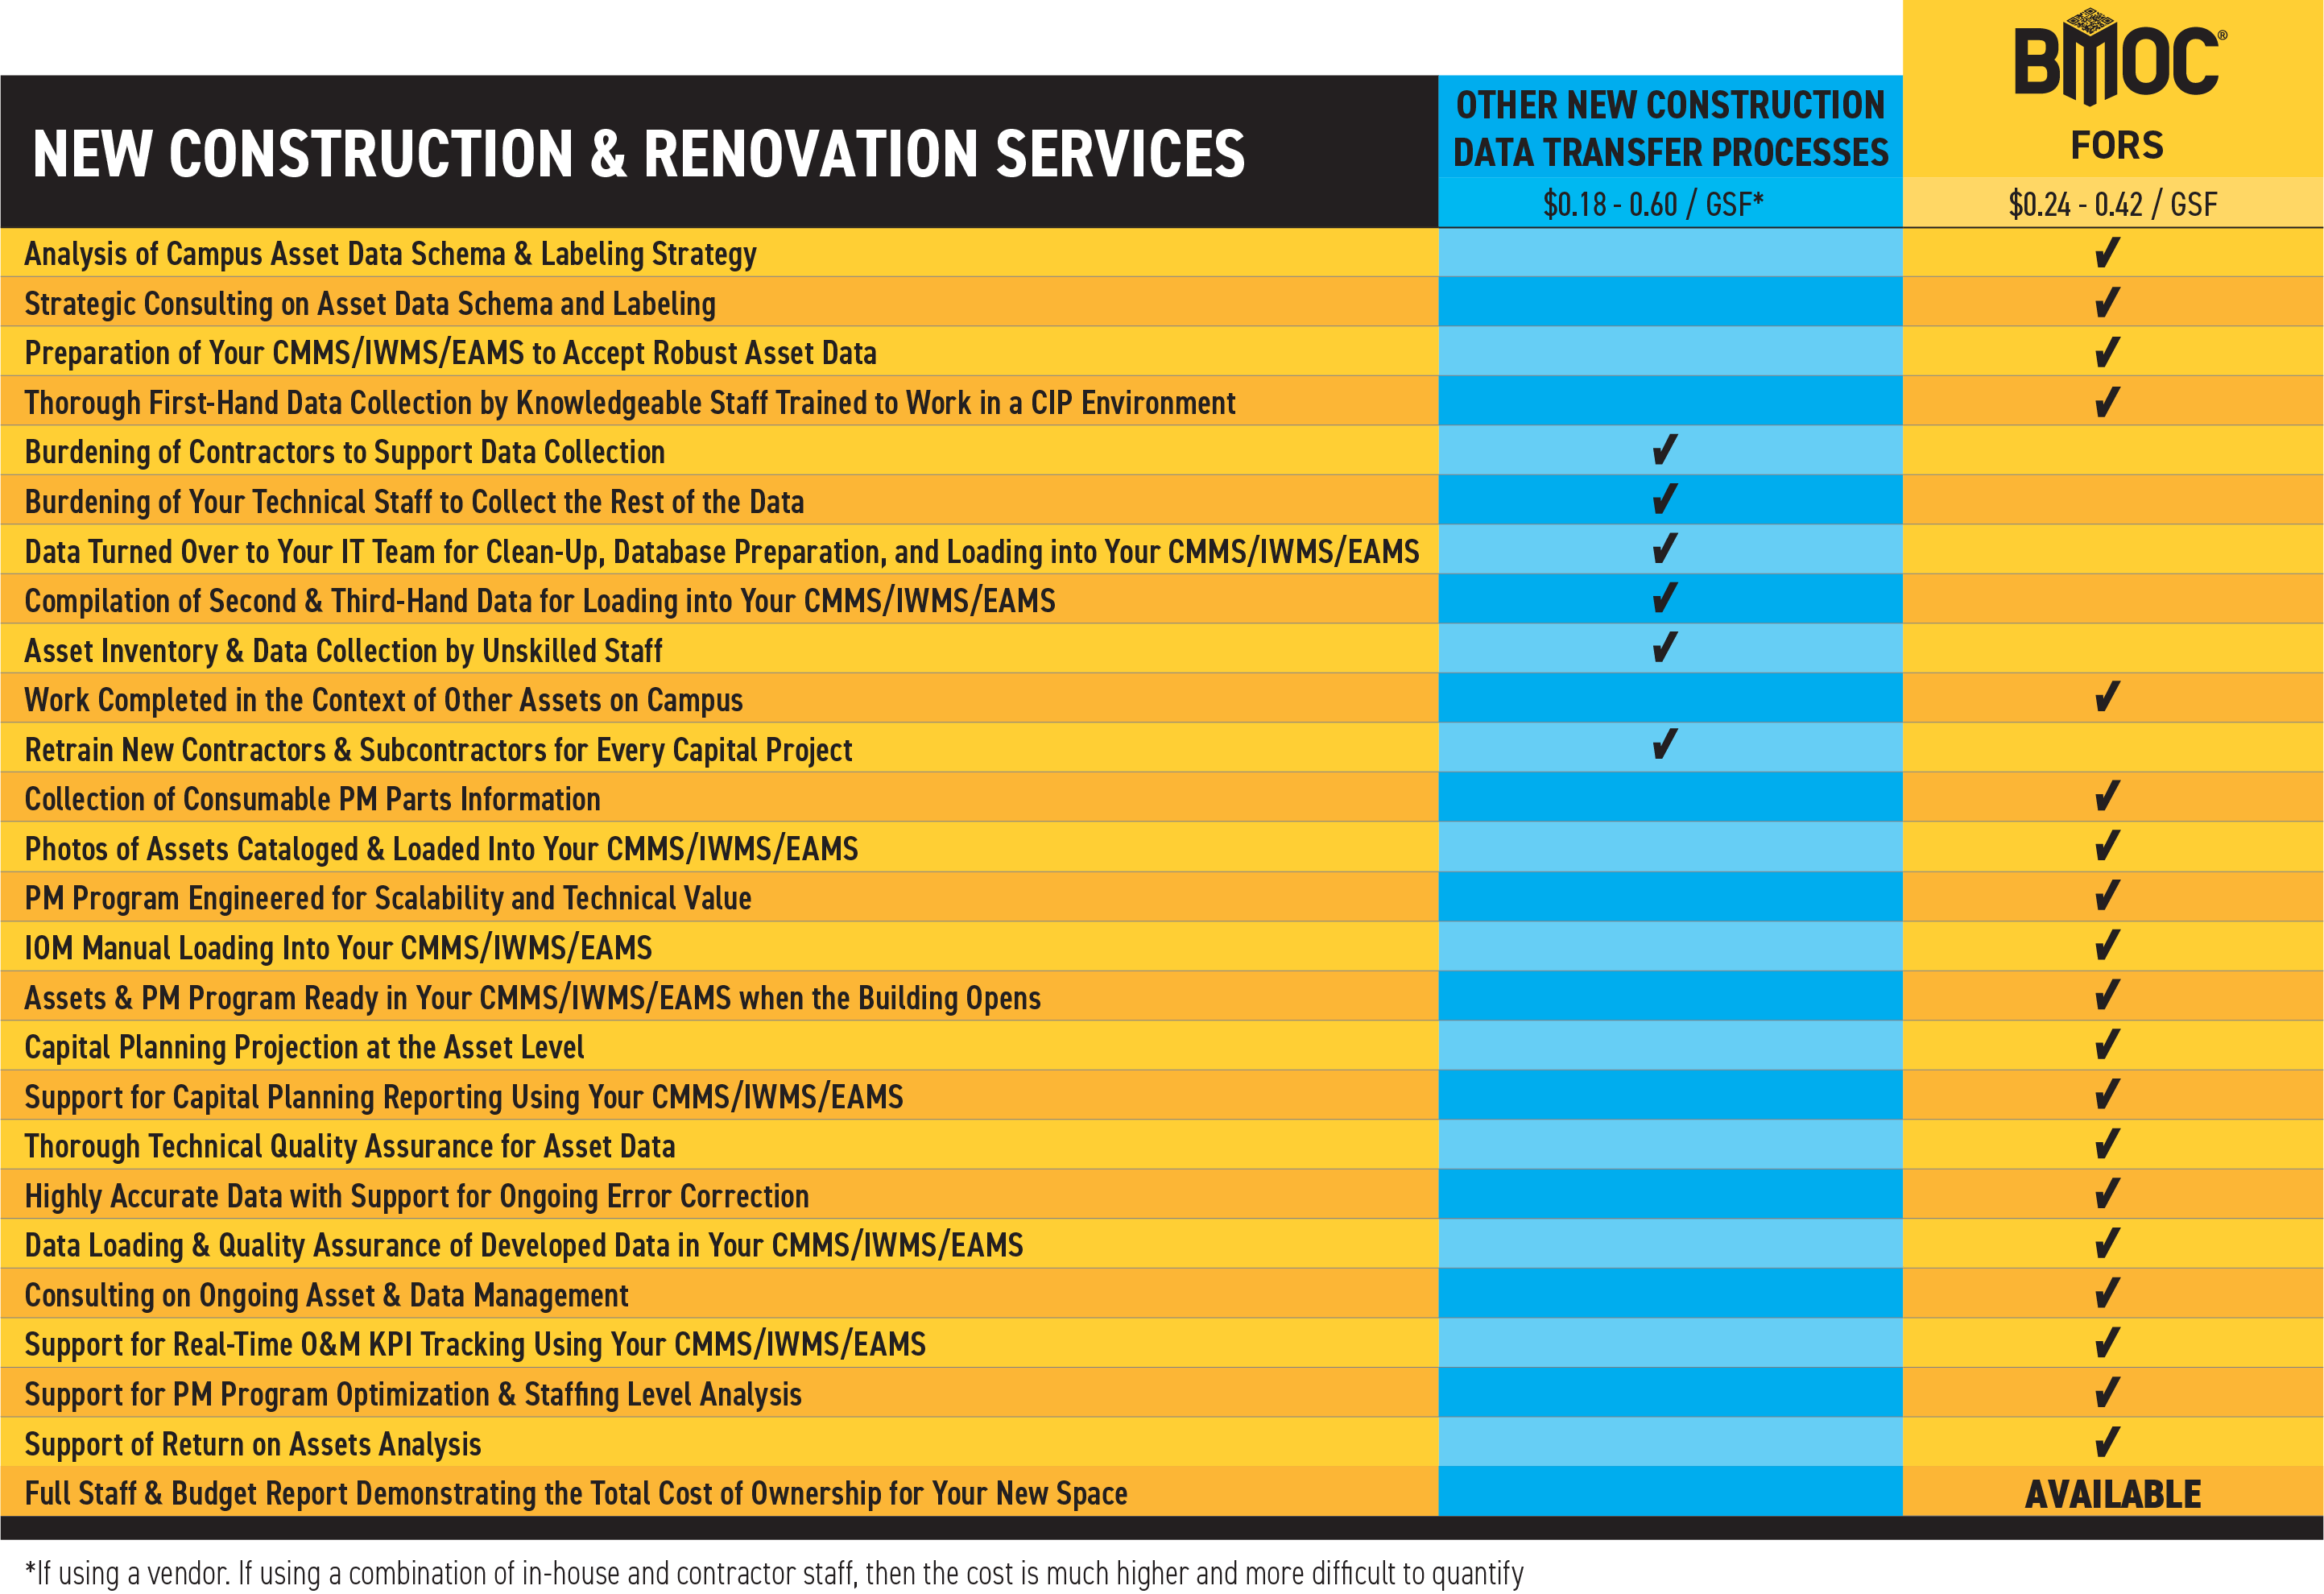 BMOC Comparison Table for New Construction